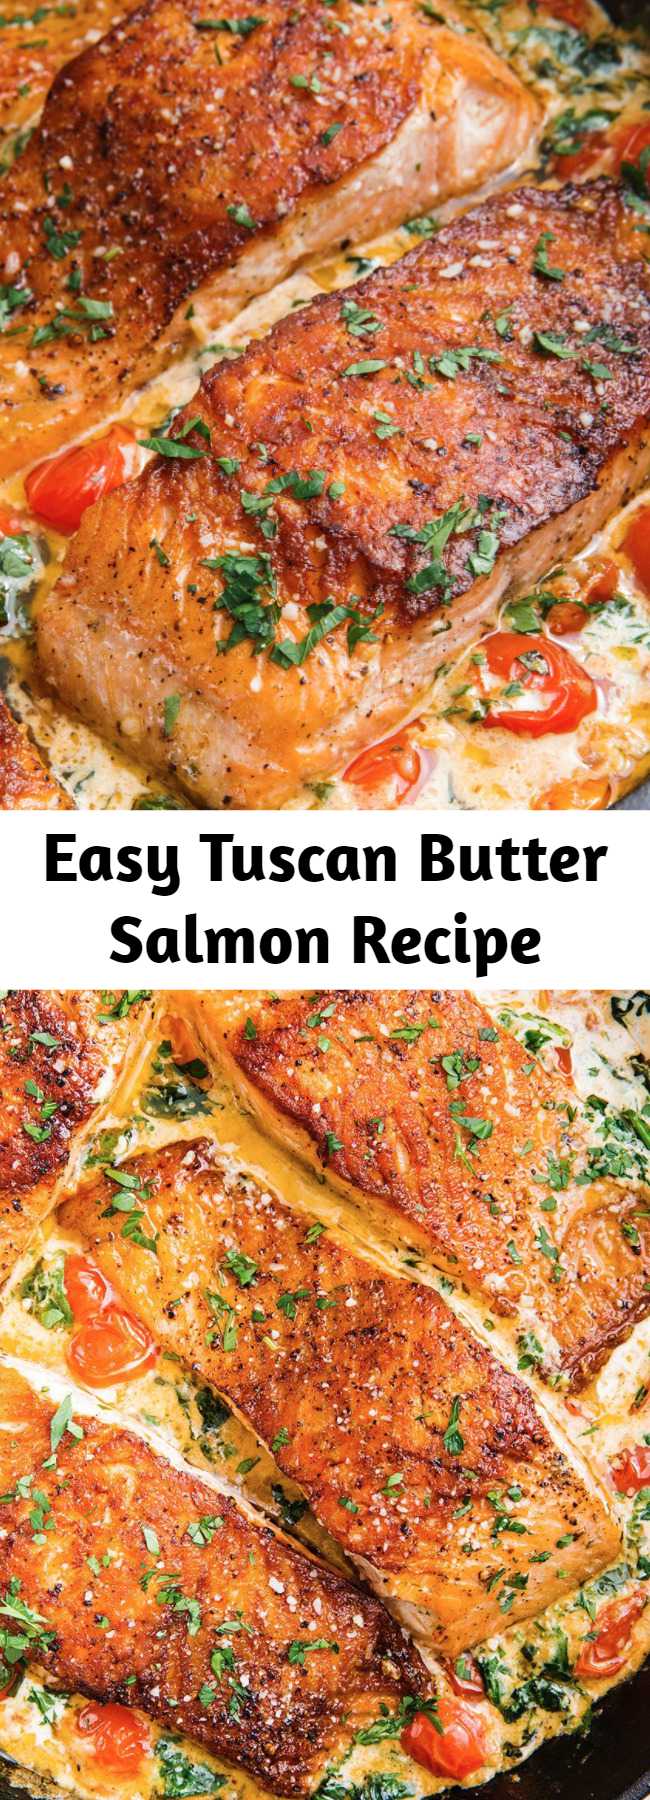 Easy Tuscan Butter Salmon Recipe - Mom Secret Ingrediets